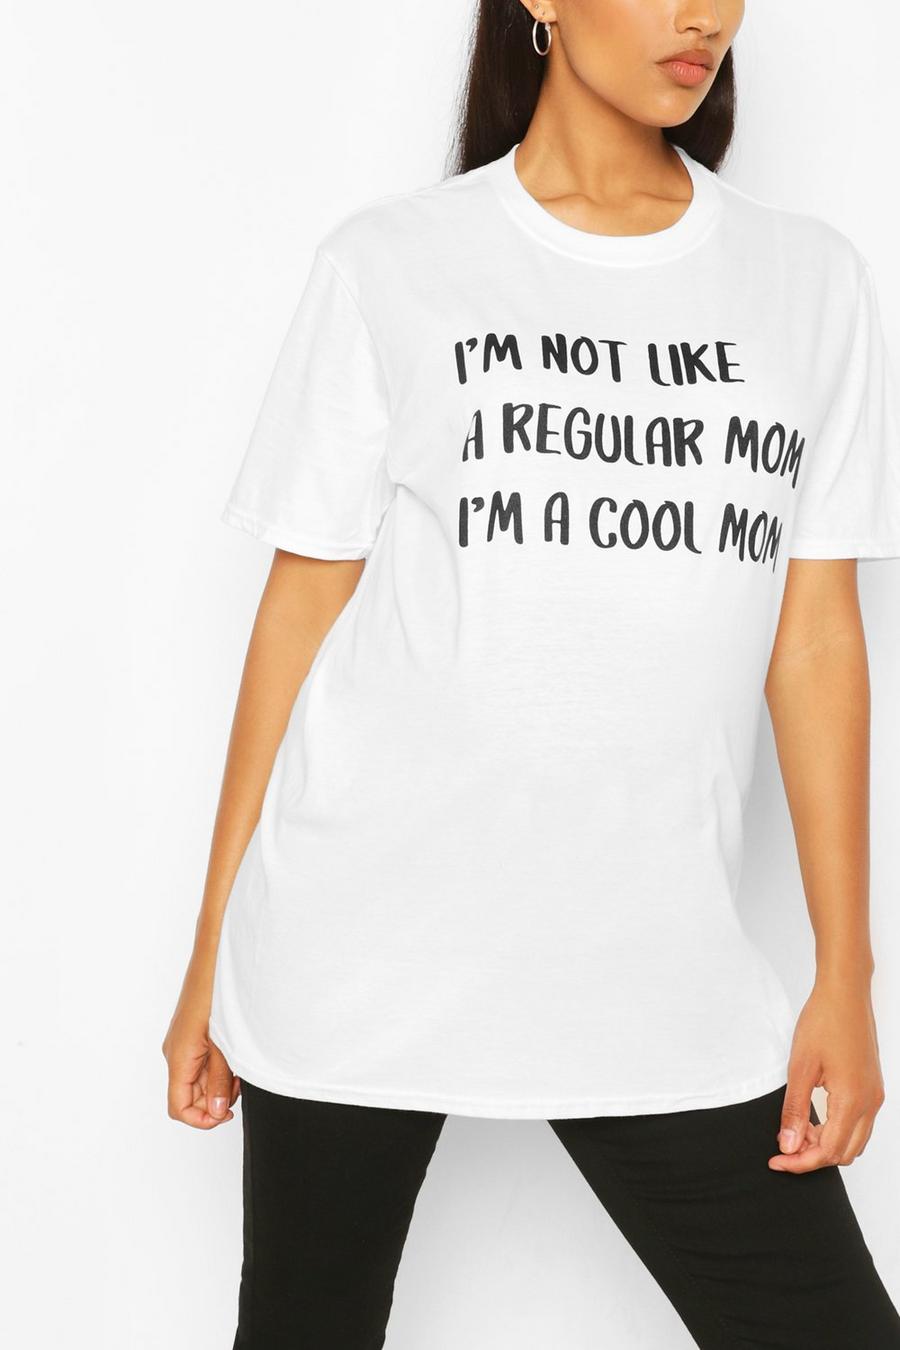 Camiseta con eslogan “Not A Regular Mom” Ropa premamá image number 1